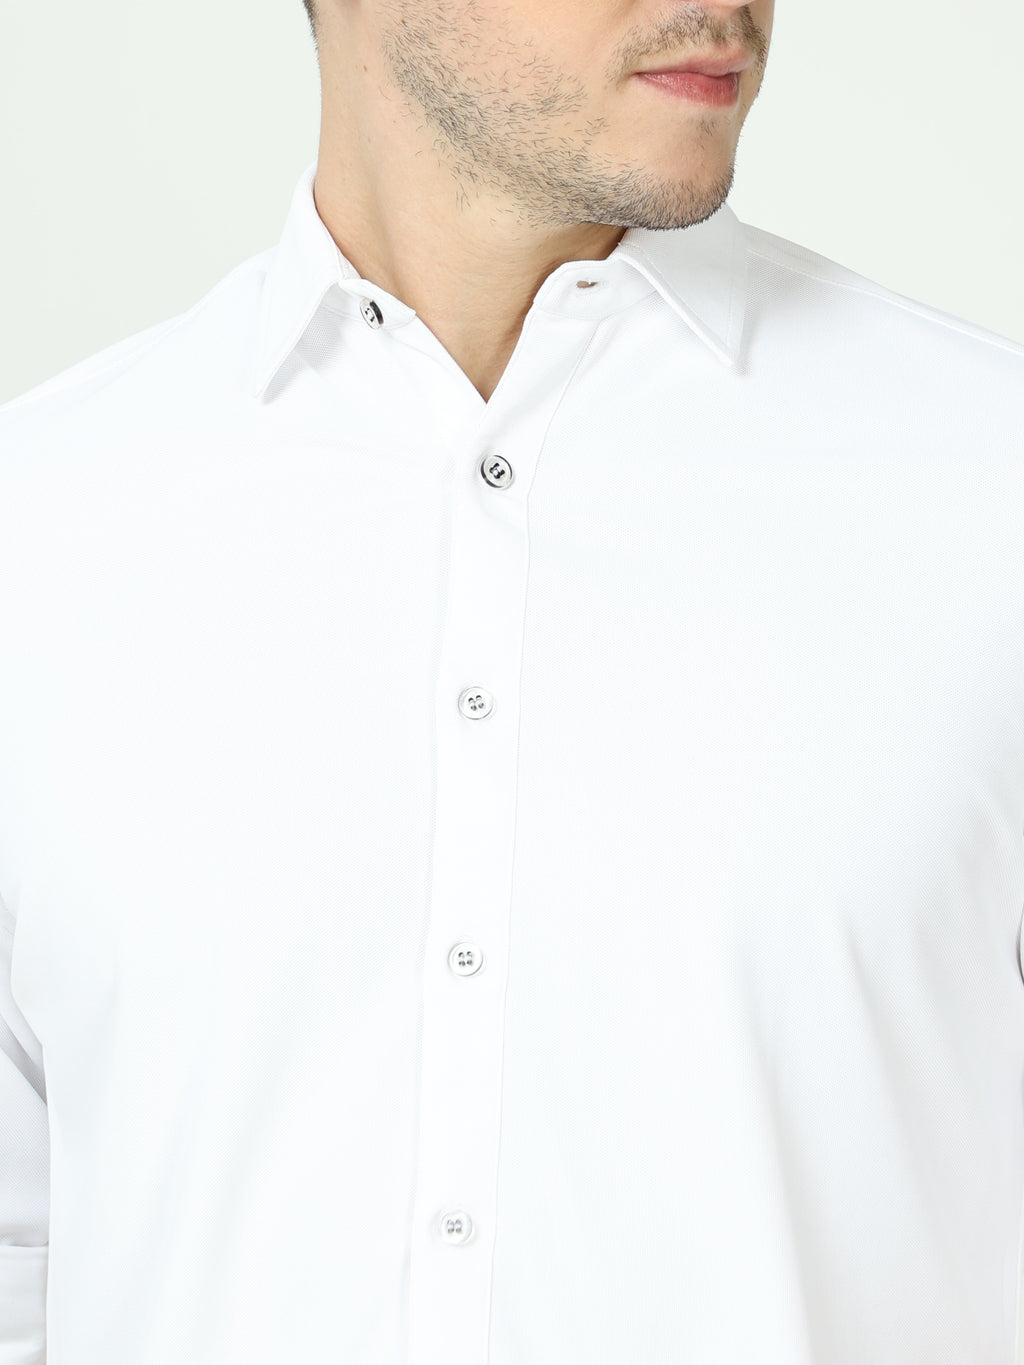 Men's rPET Casual Full Sleeve Shirt